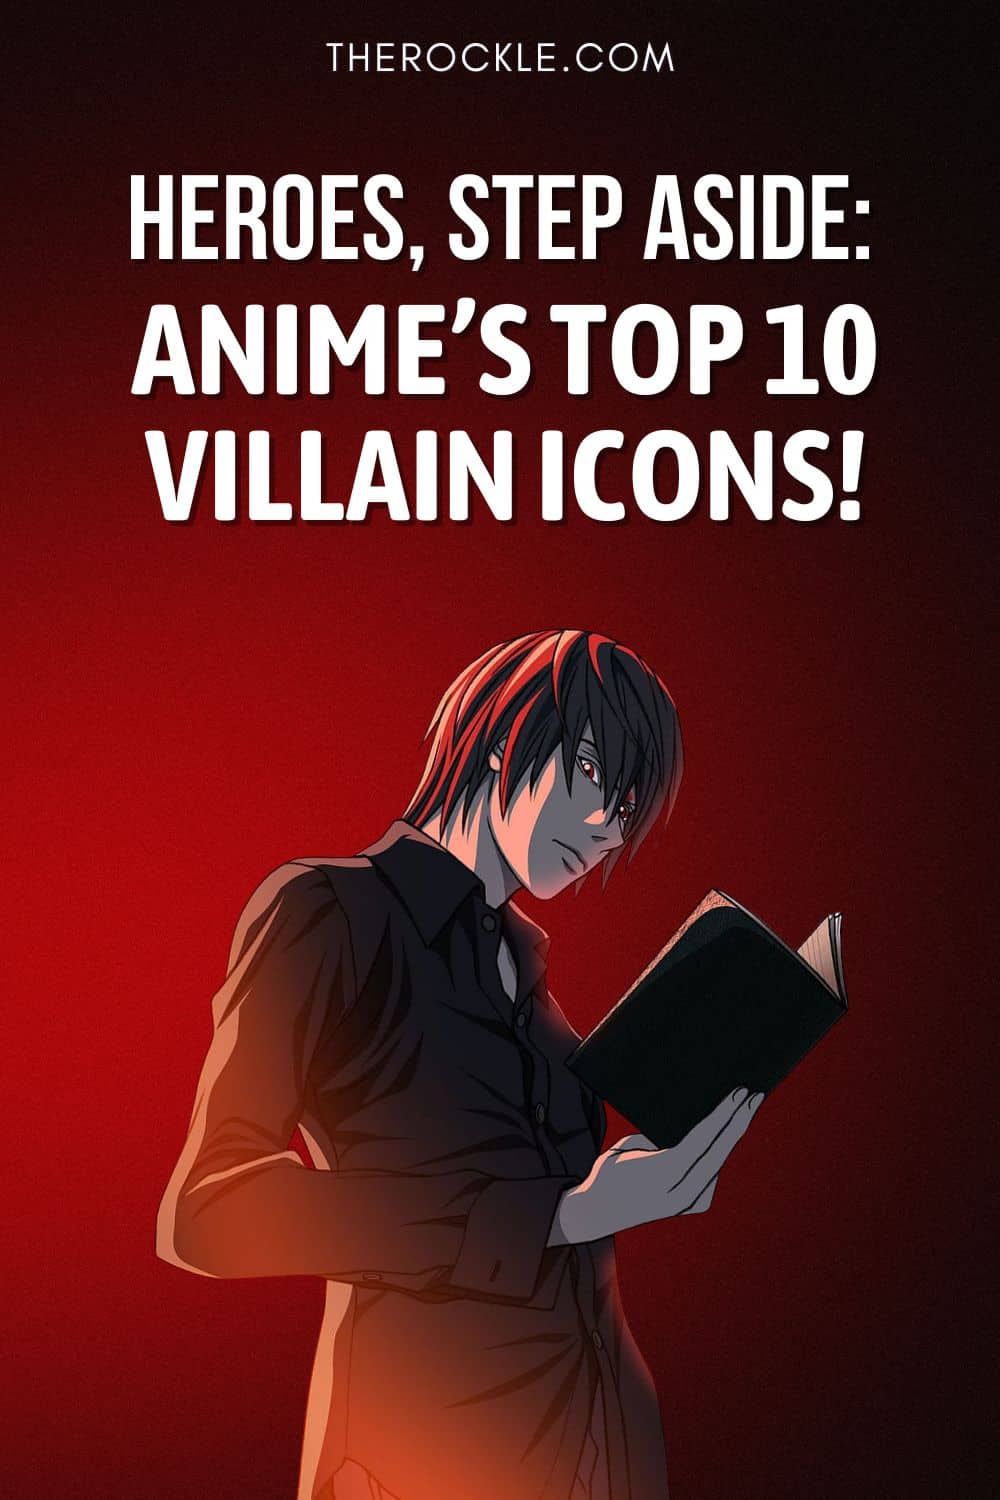 Top 10 Anime Villain Icons Pinterest